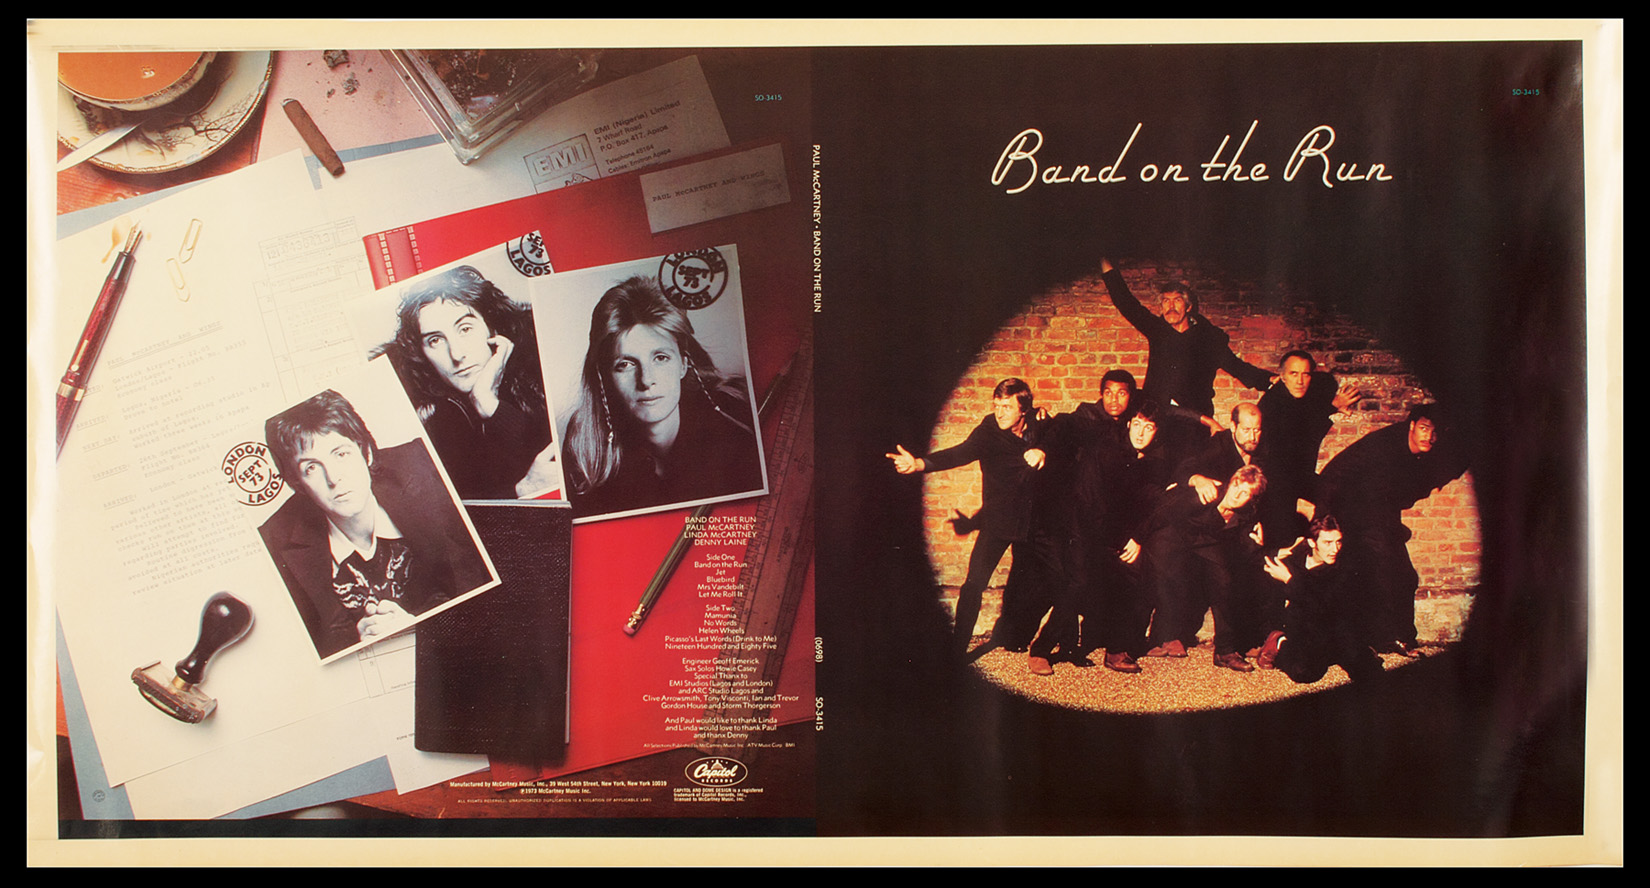 Paul mccartneys band. Paul MCCARTNEY & Wings (1973). Paul MCCARTNEY 1977. Band on the Run альбом 1973 года группы Wings сэра пола Маккартни. Пол Маккартни + ансамбль "Wings" (1977).